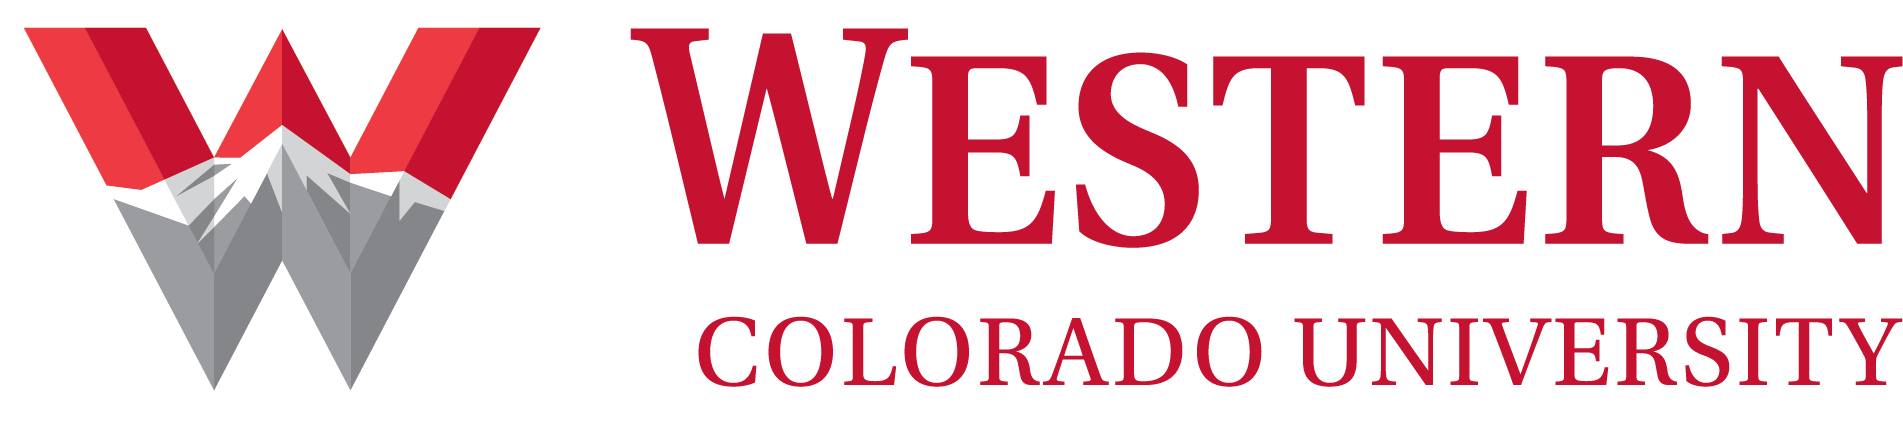 banner logo for Western Colorado University